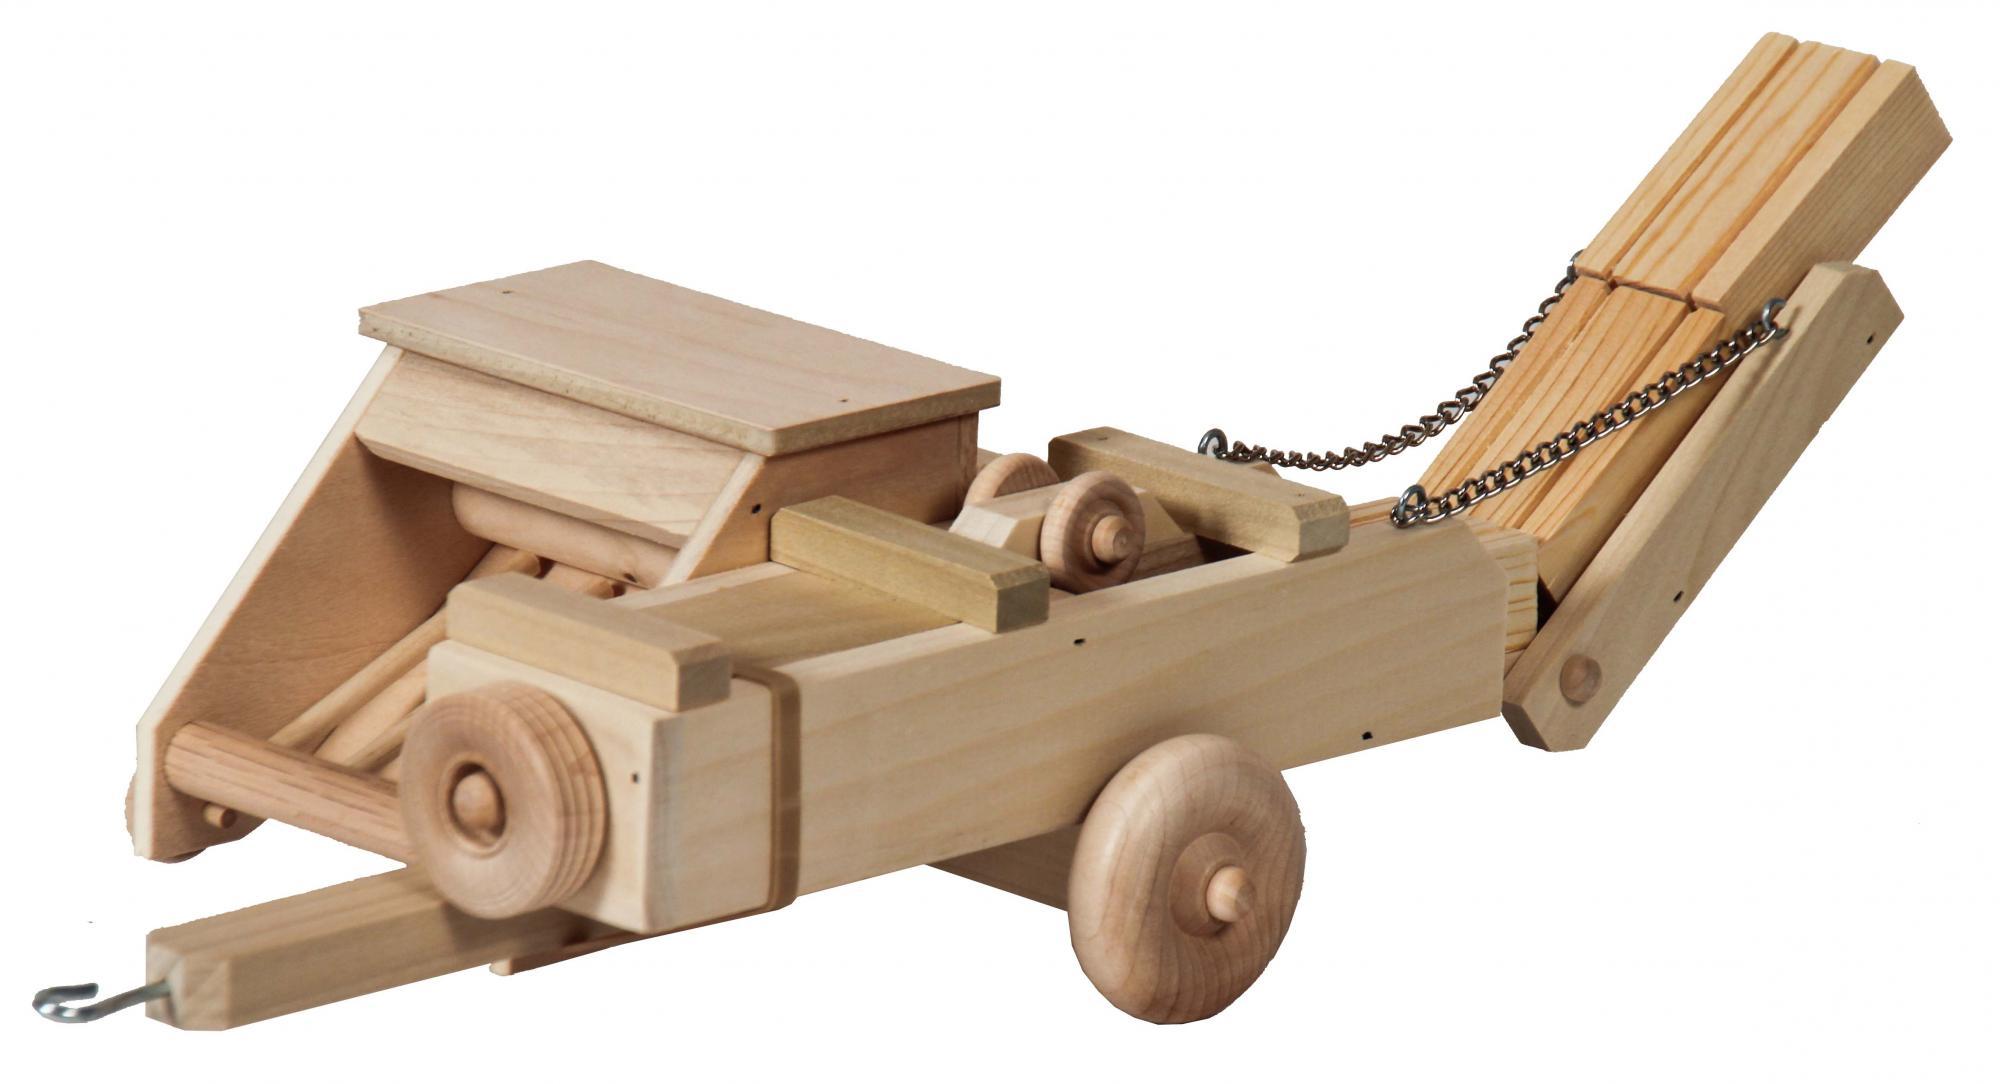 Wooden Farm Toys Amish Furniture